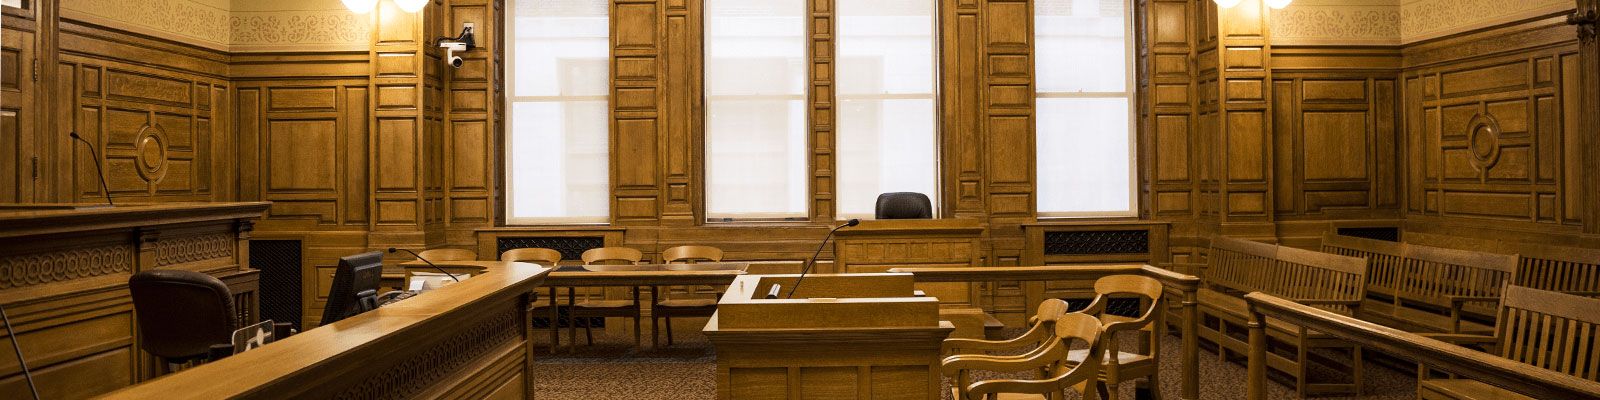 Courtroom interior 